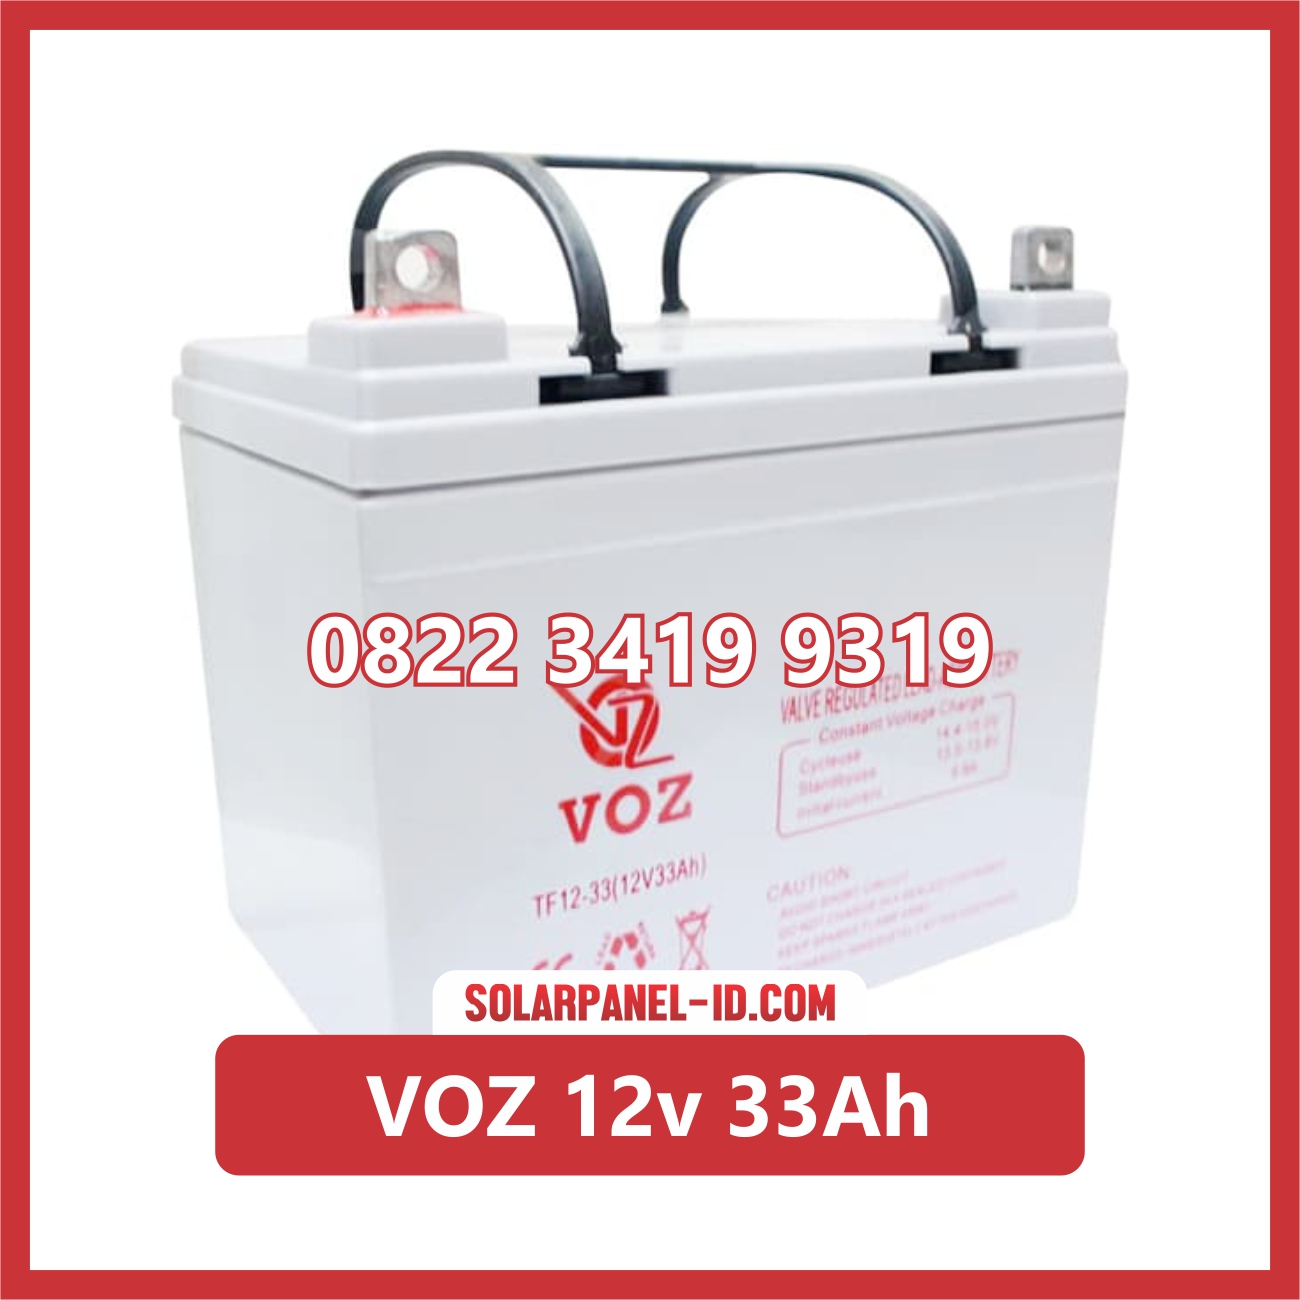 VOZ baterai kering 12v 33Ah baterai panel surya